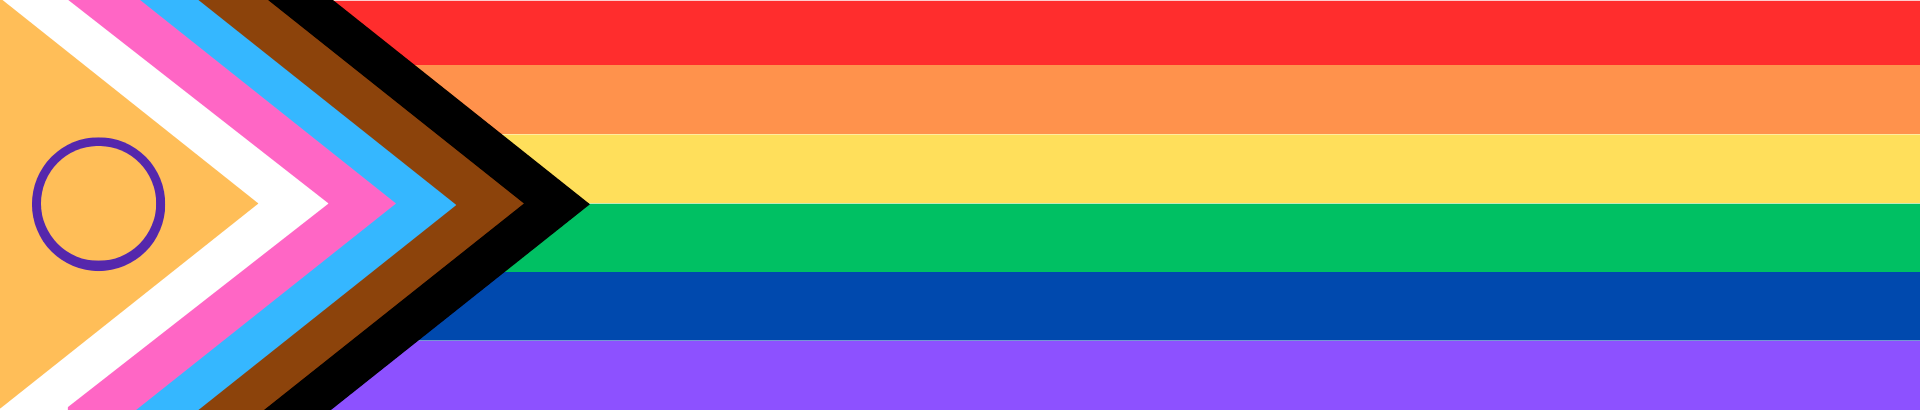 Intersex Pride Progress Flag